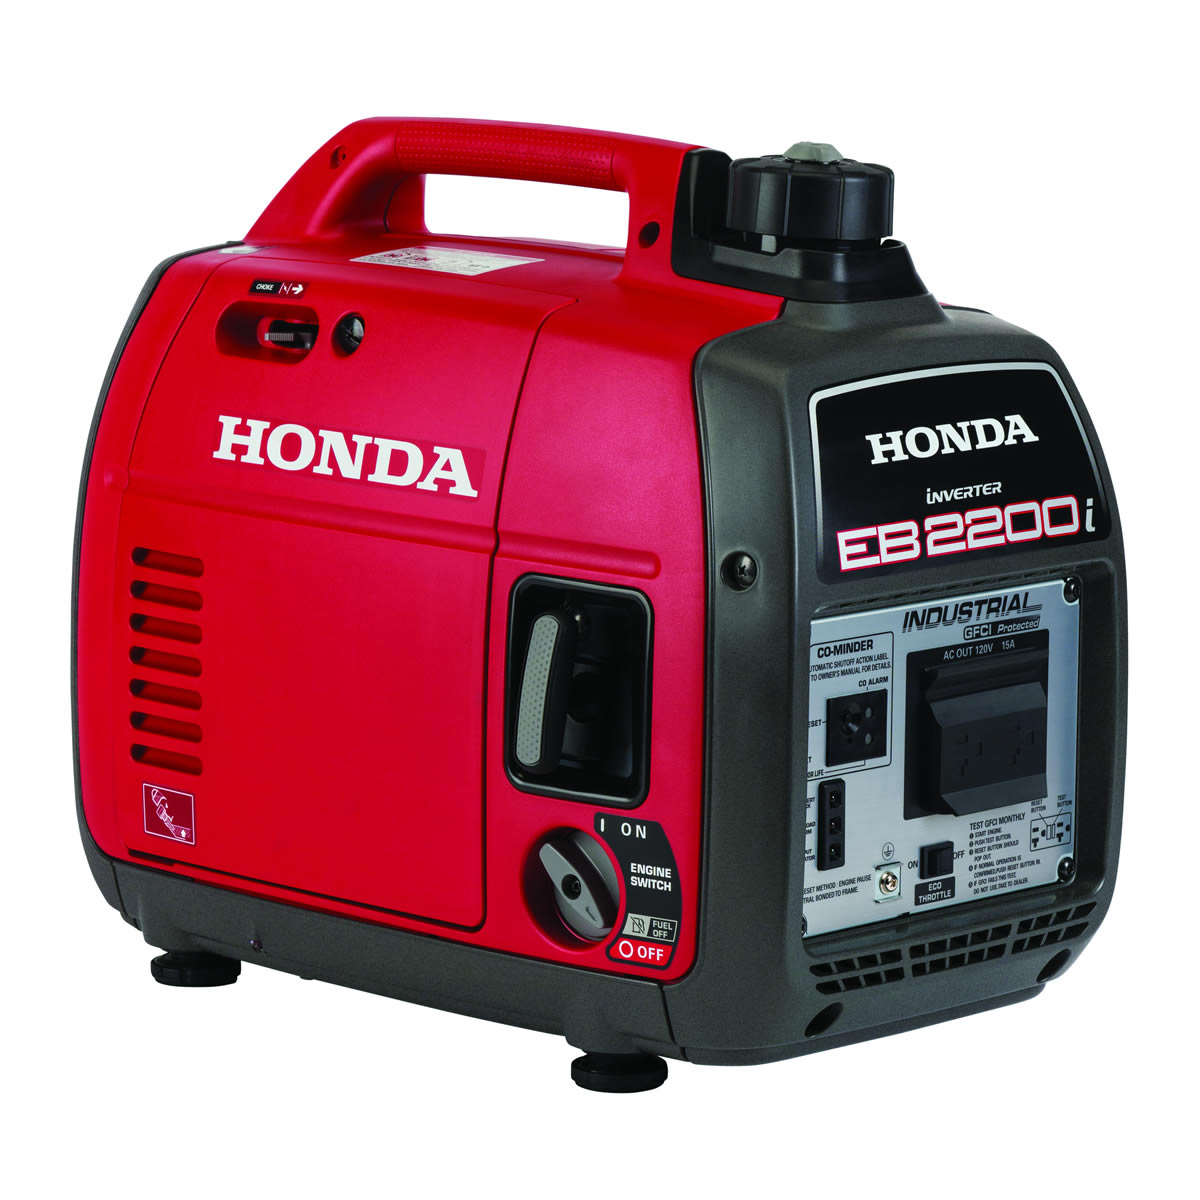 What Is A Honda Generator?